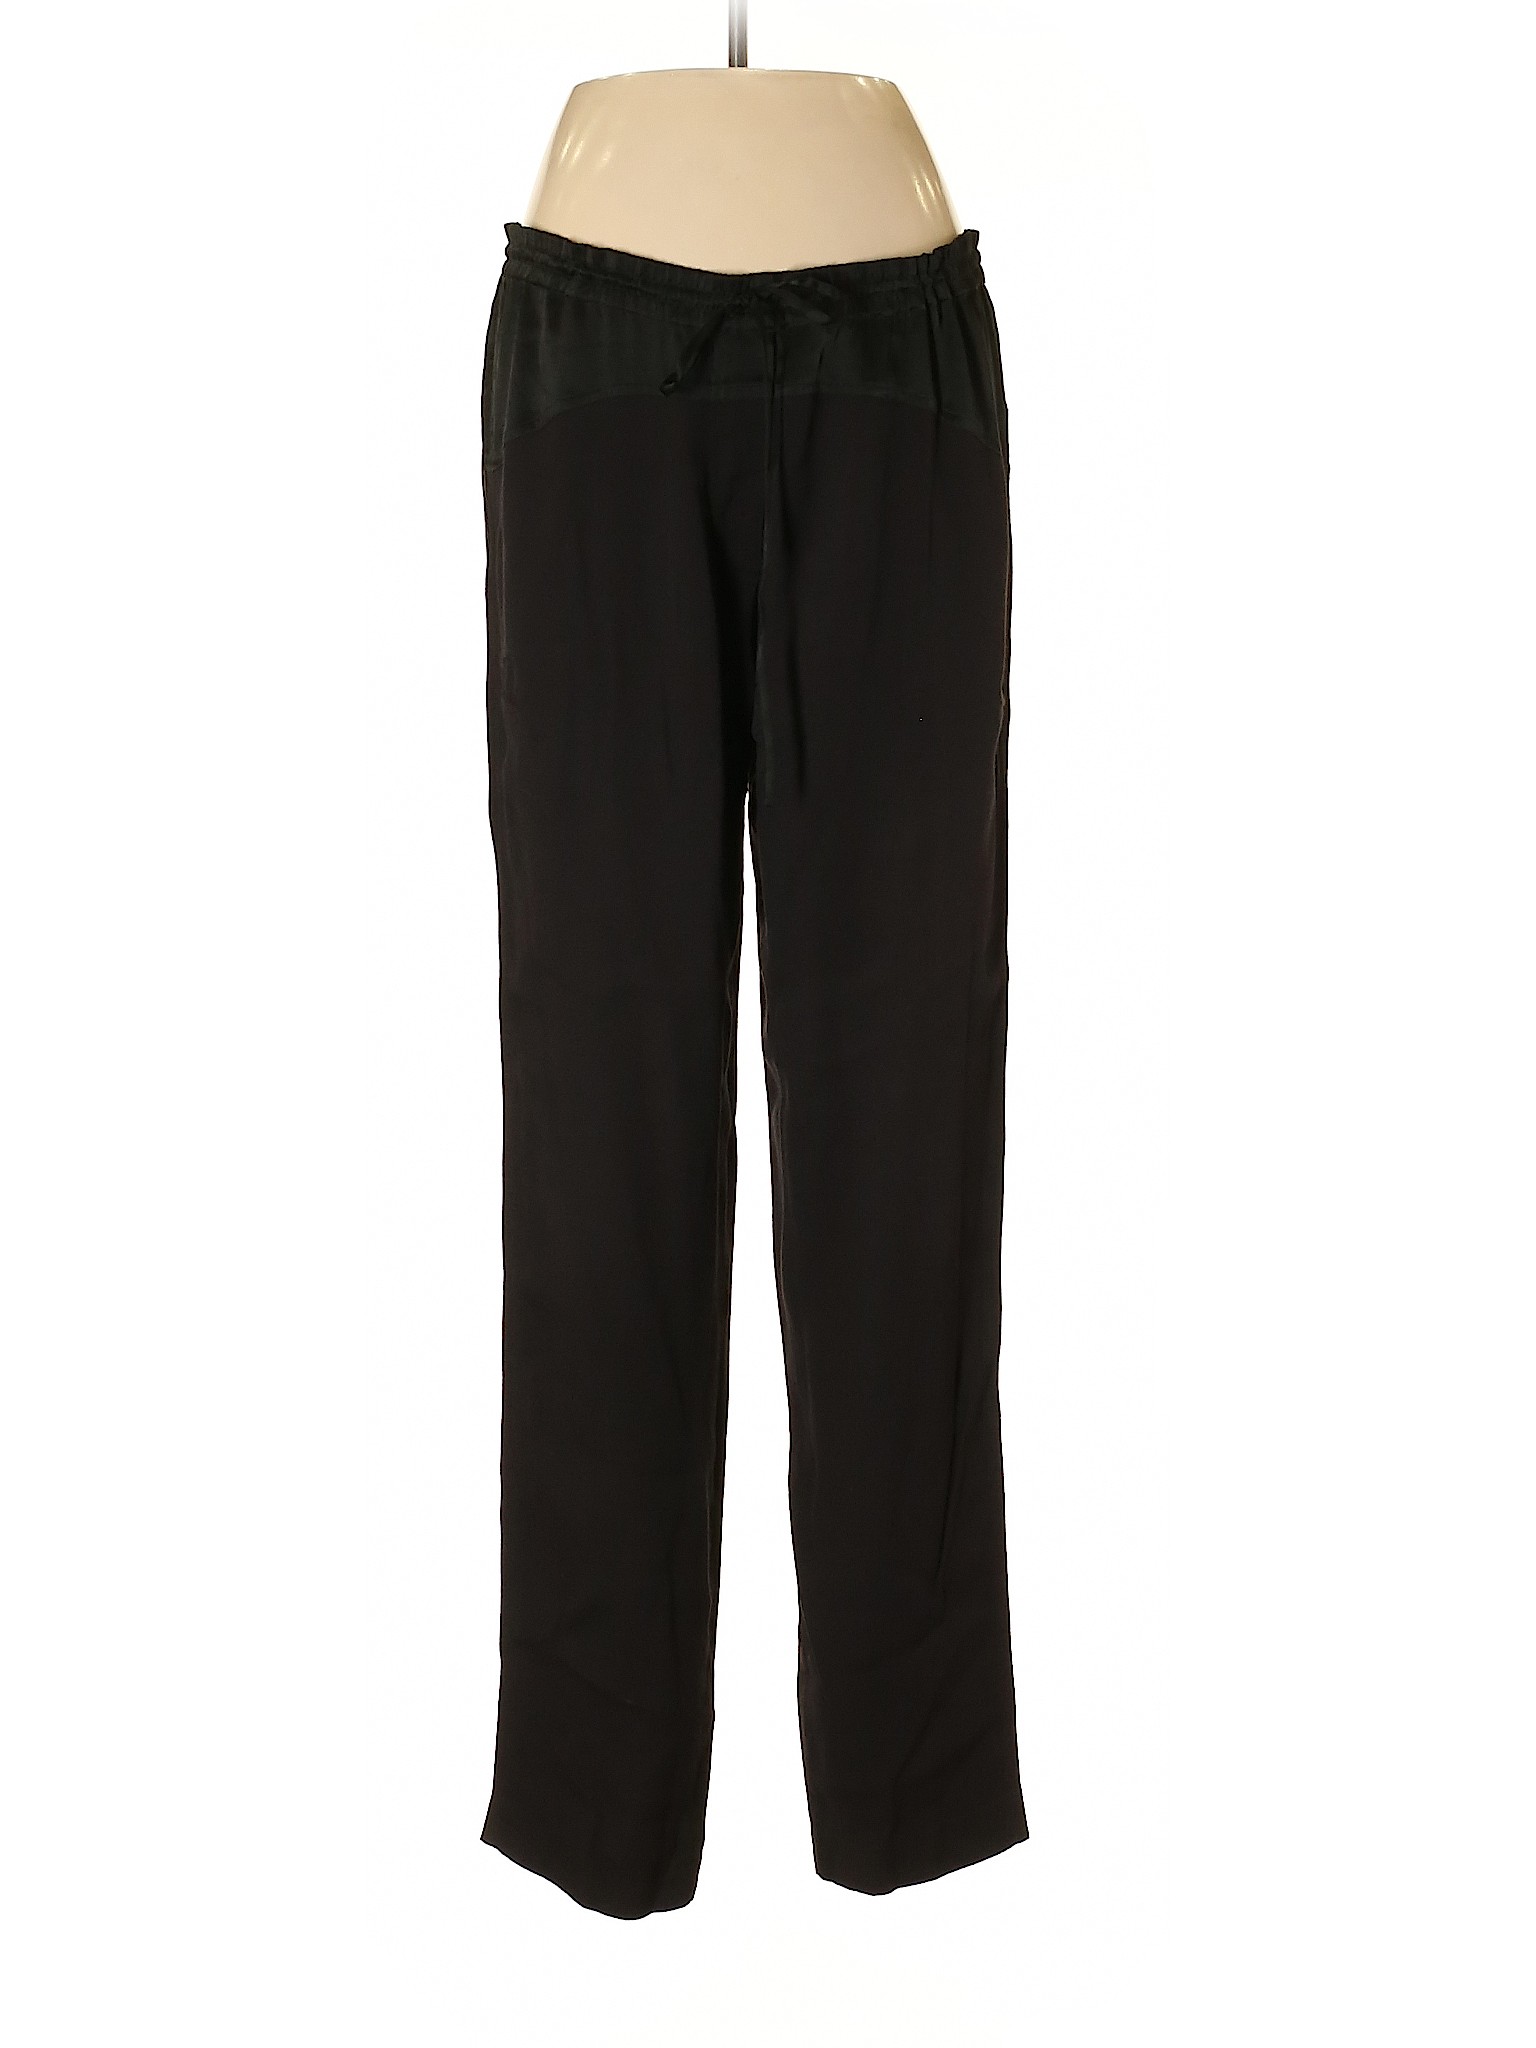 Rebecca Taylor Women Black Casual Pants 4 | eBay